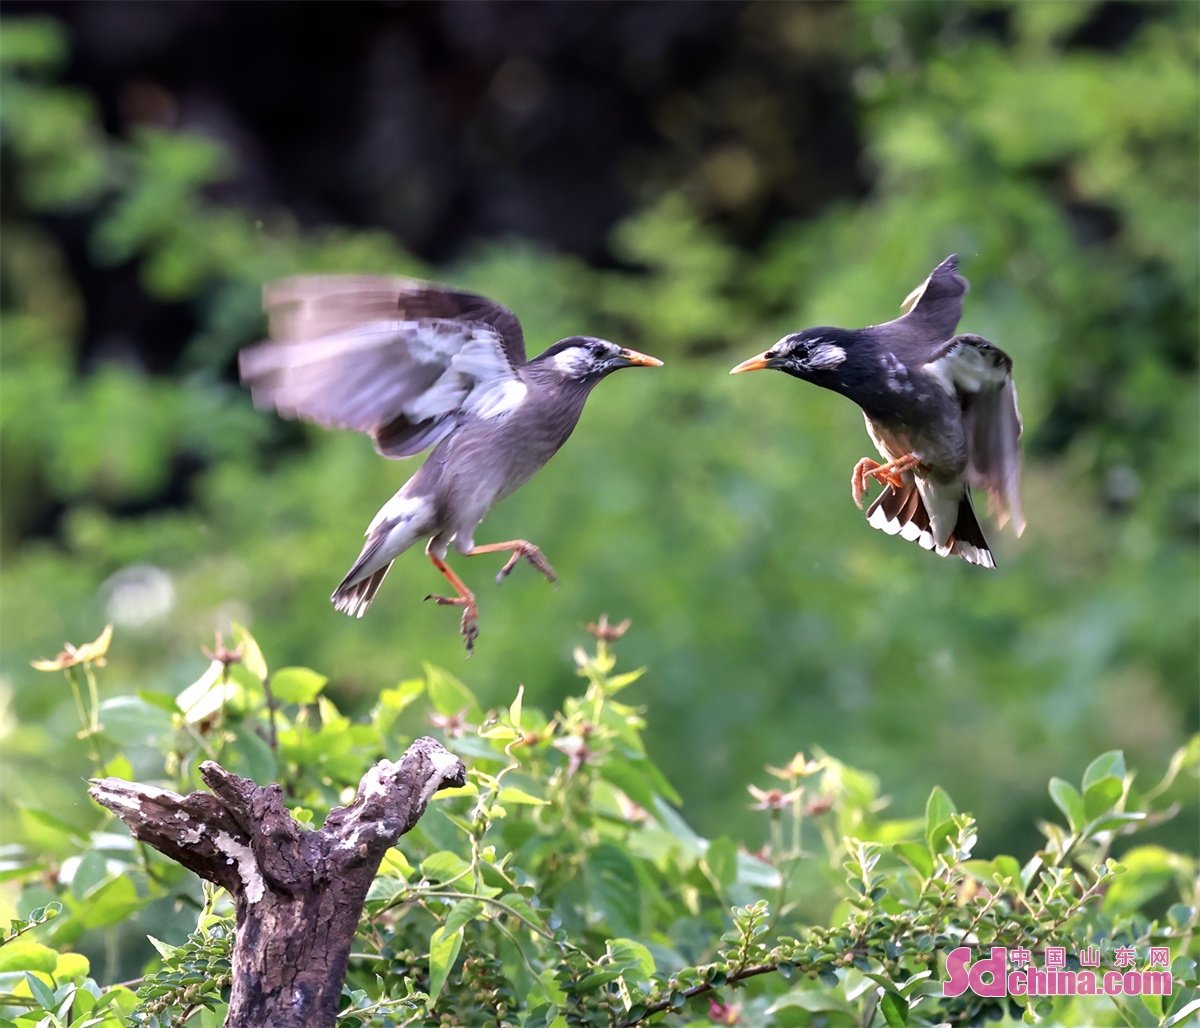  <br/>　　5月24日、済南の大明湖景勝地では、何羽かのムクドリが空を舞ったり、餌を探して戯れたりして、とても萌える様子でした。（撮影・鍾福生）<br/>